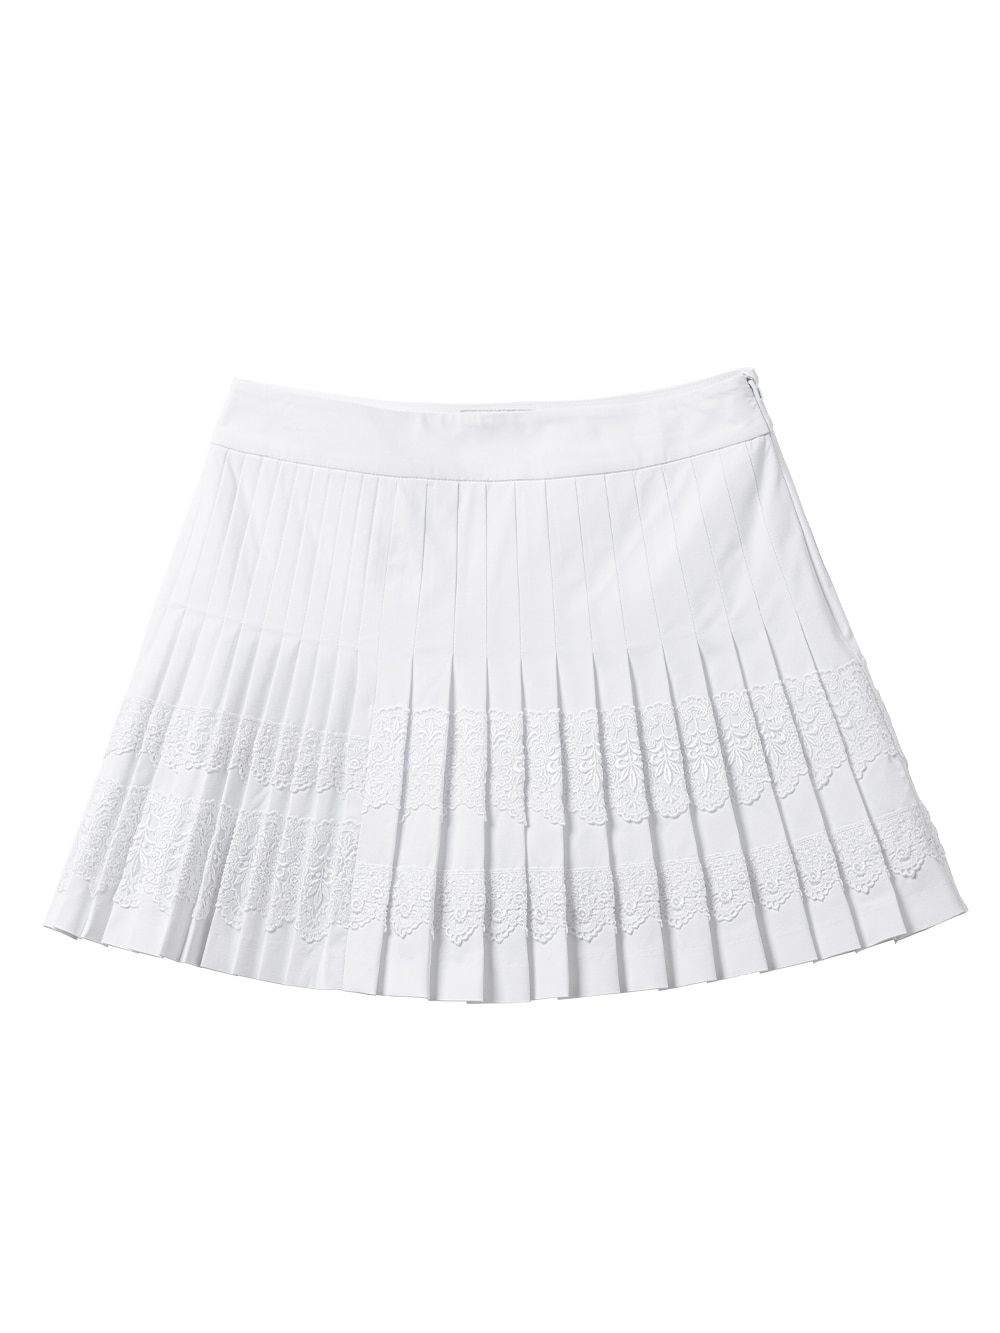 UTAA Lace Flare Skirt : White (UB2SKF220WH)